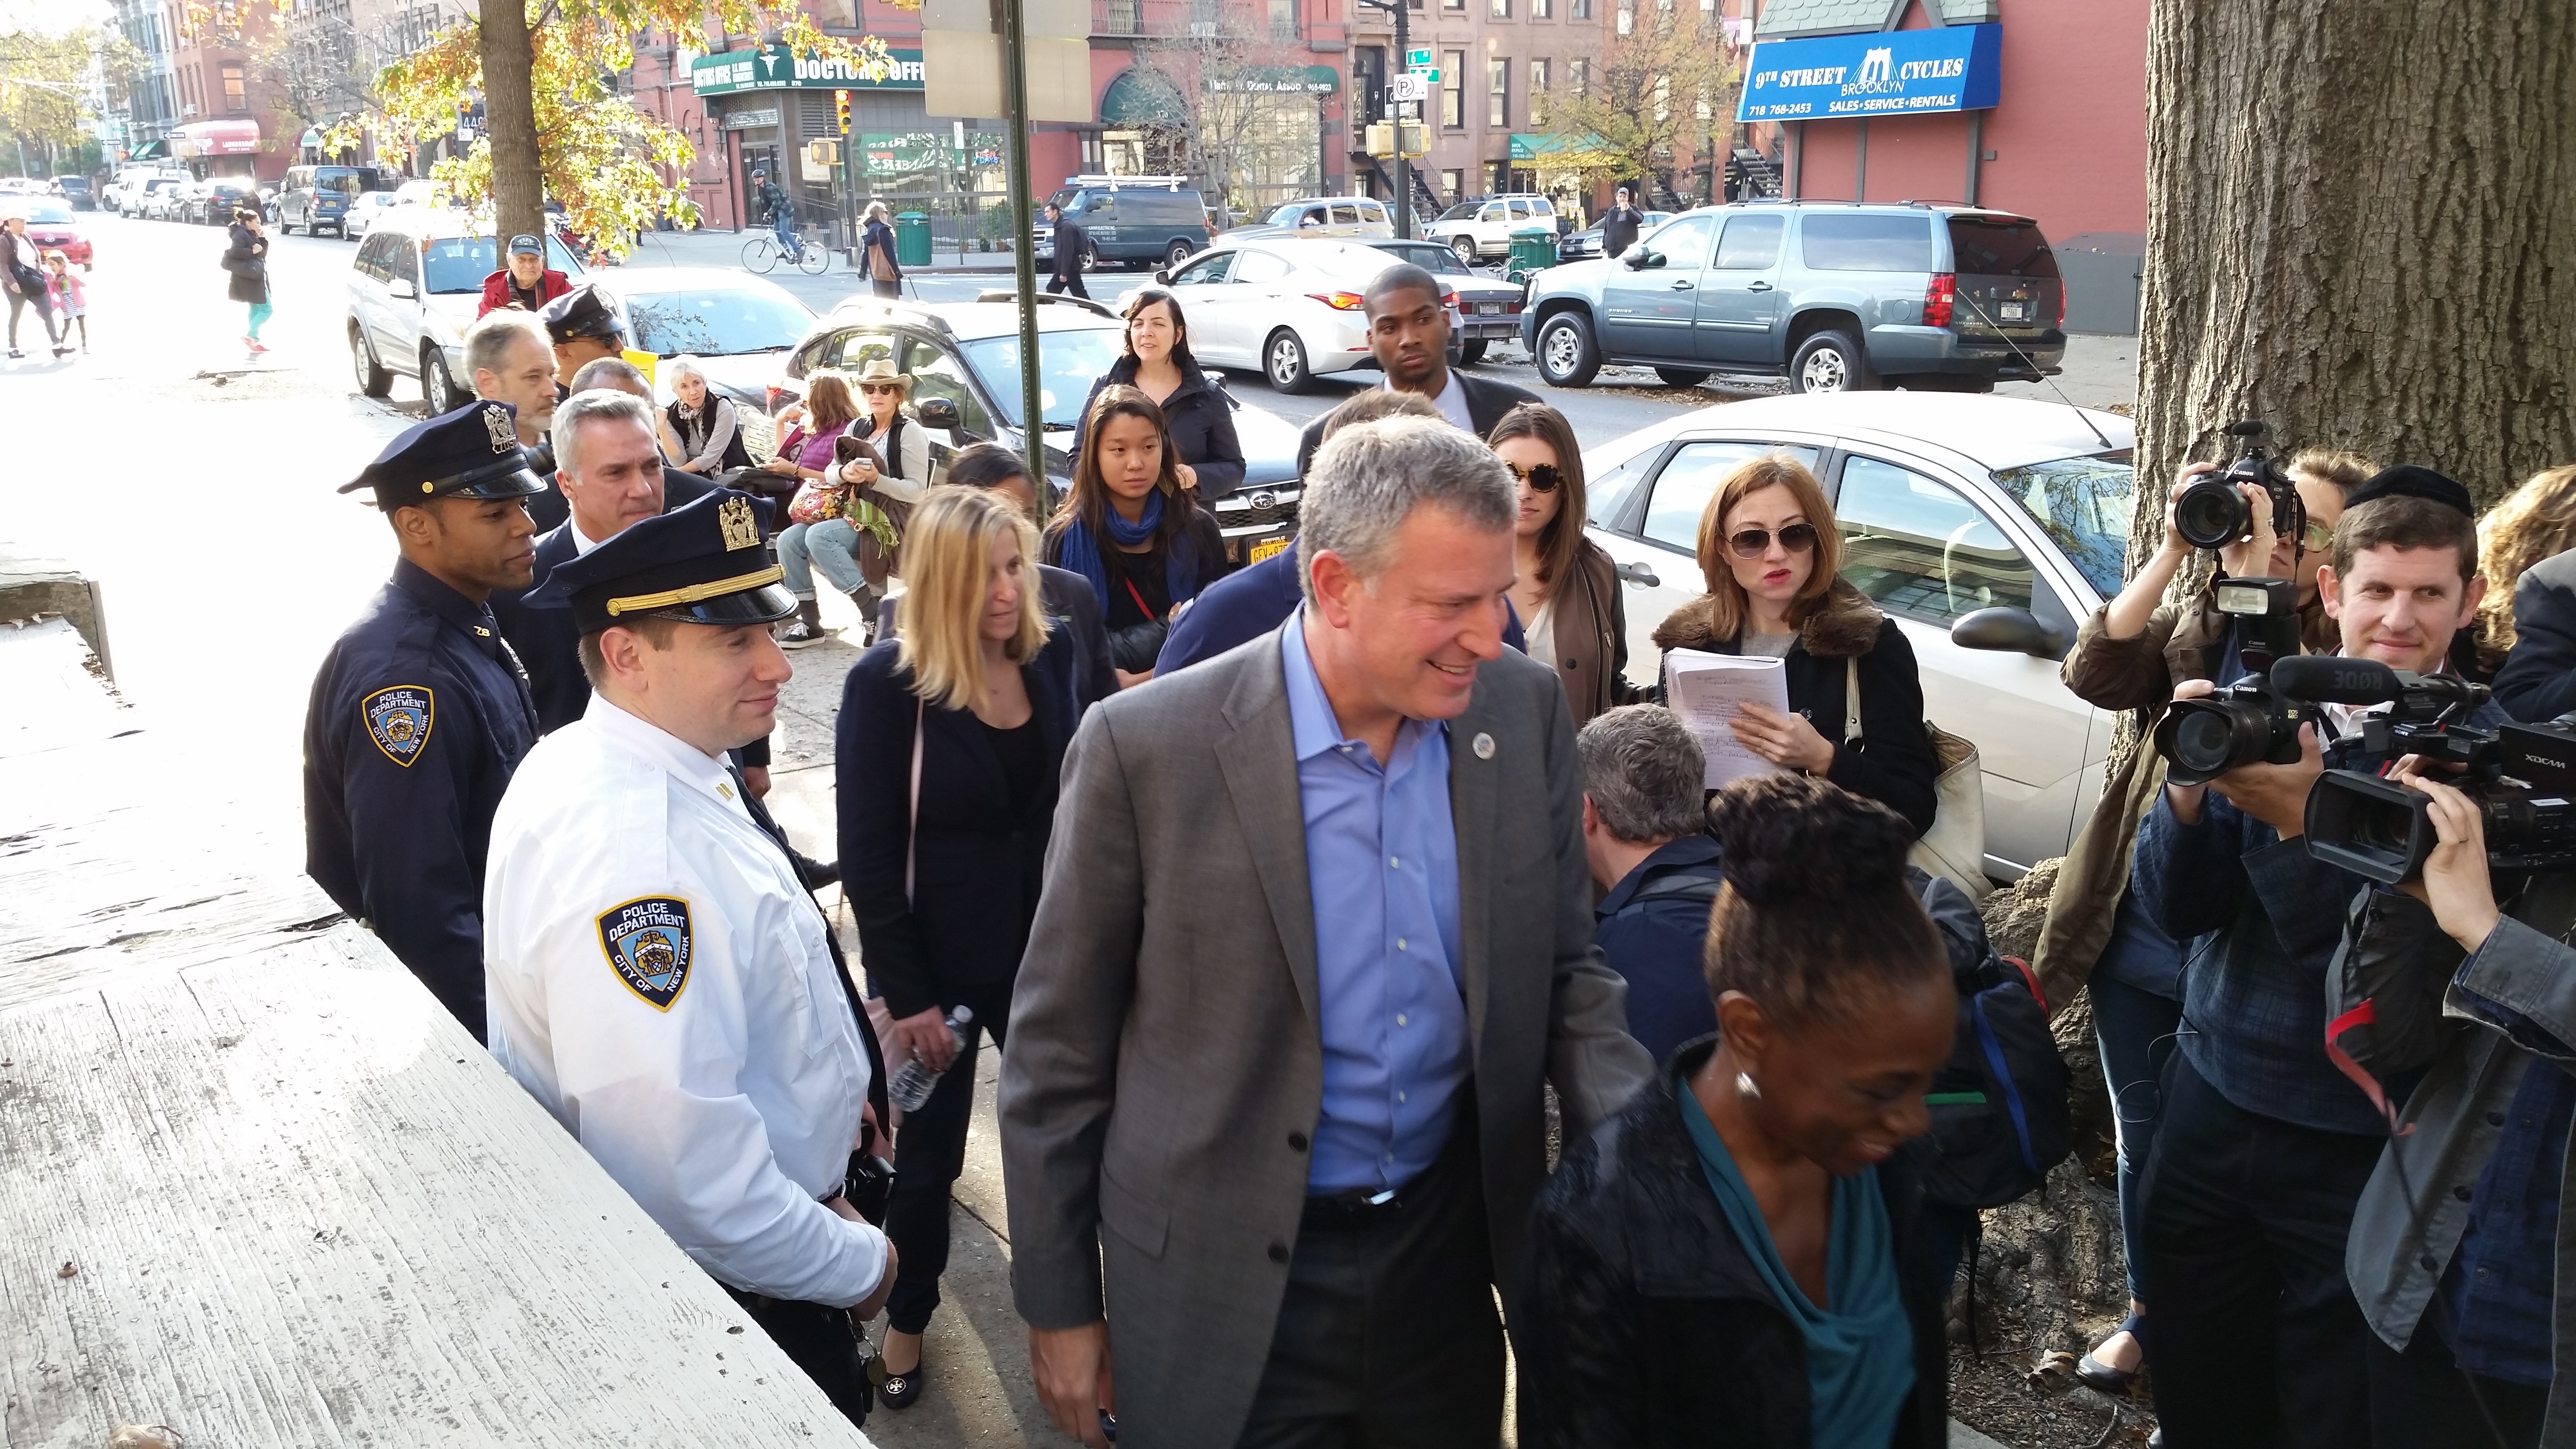 Mayor Bill de Blasio before casting his vote in Park Slope, Brooklyn today. (Photo: Ross Barkan)